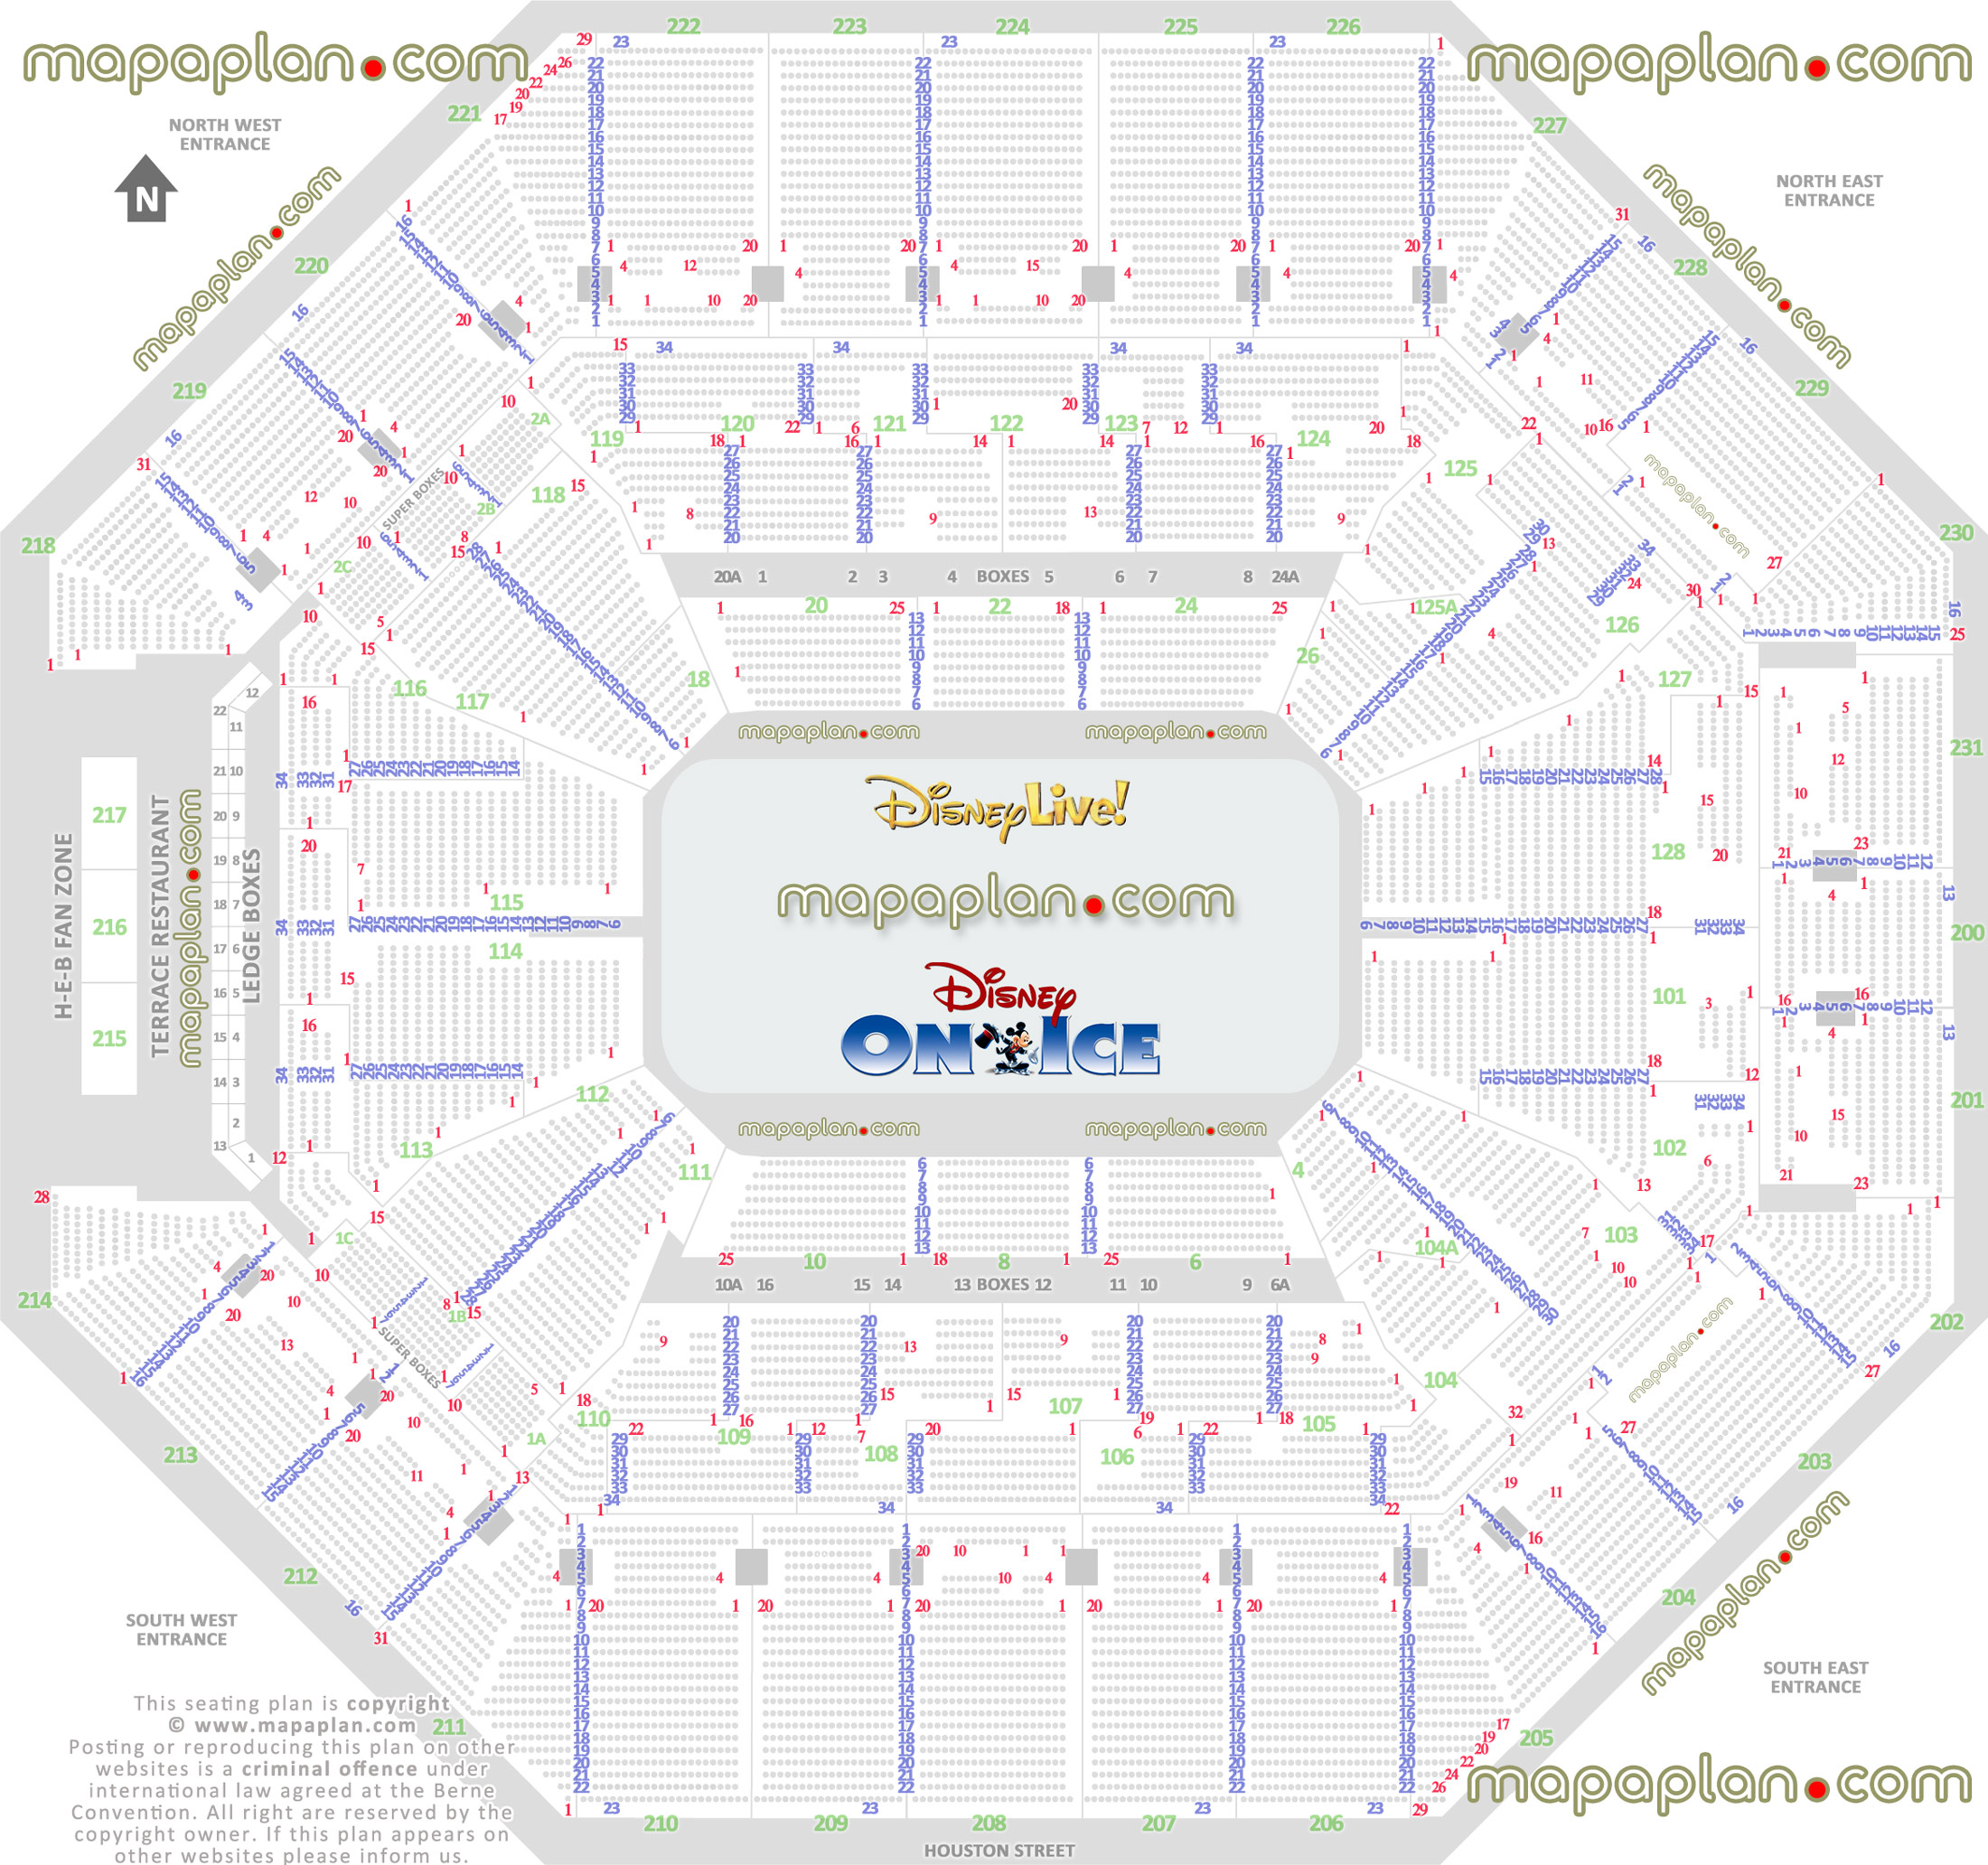 AT&T Center Disney Live & Disney on Ice arena chart